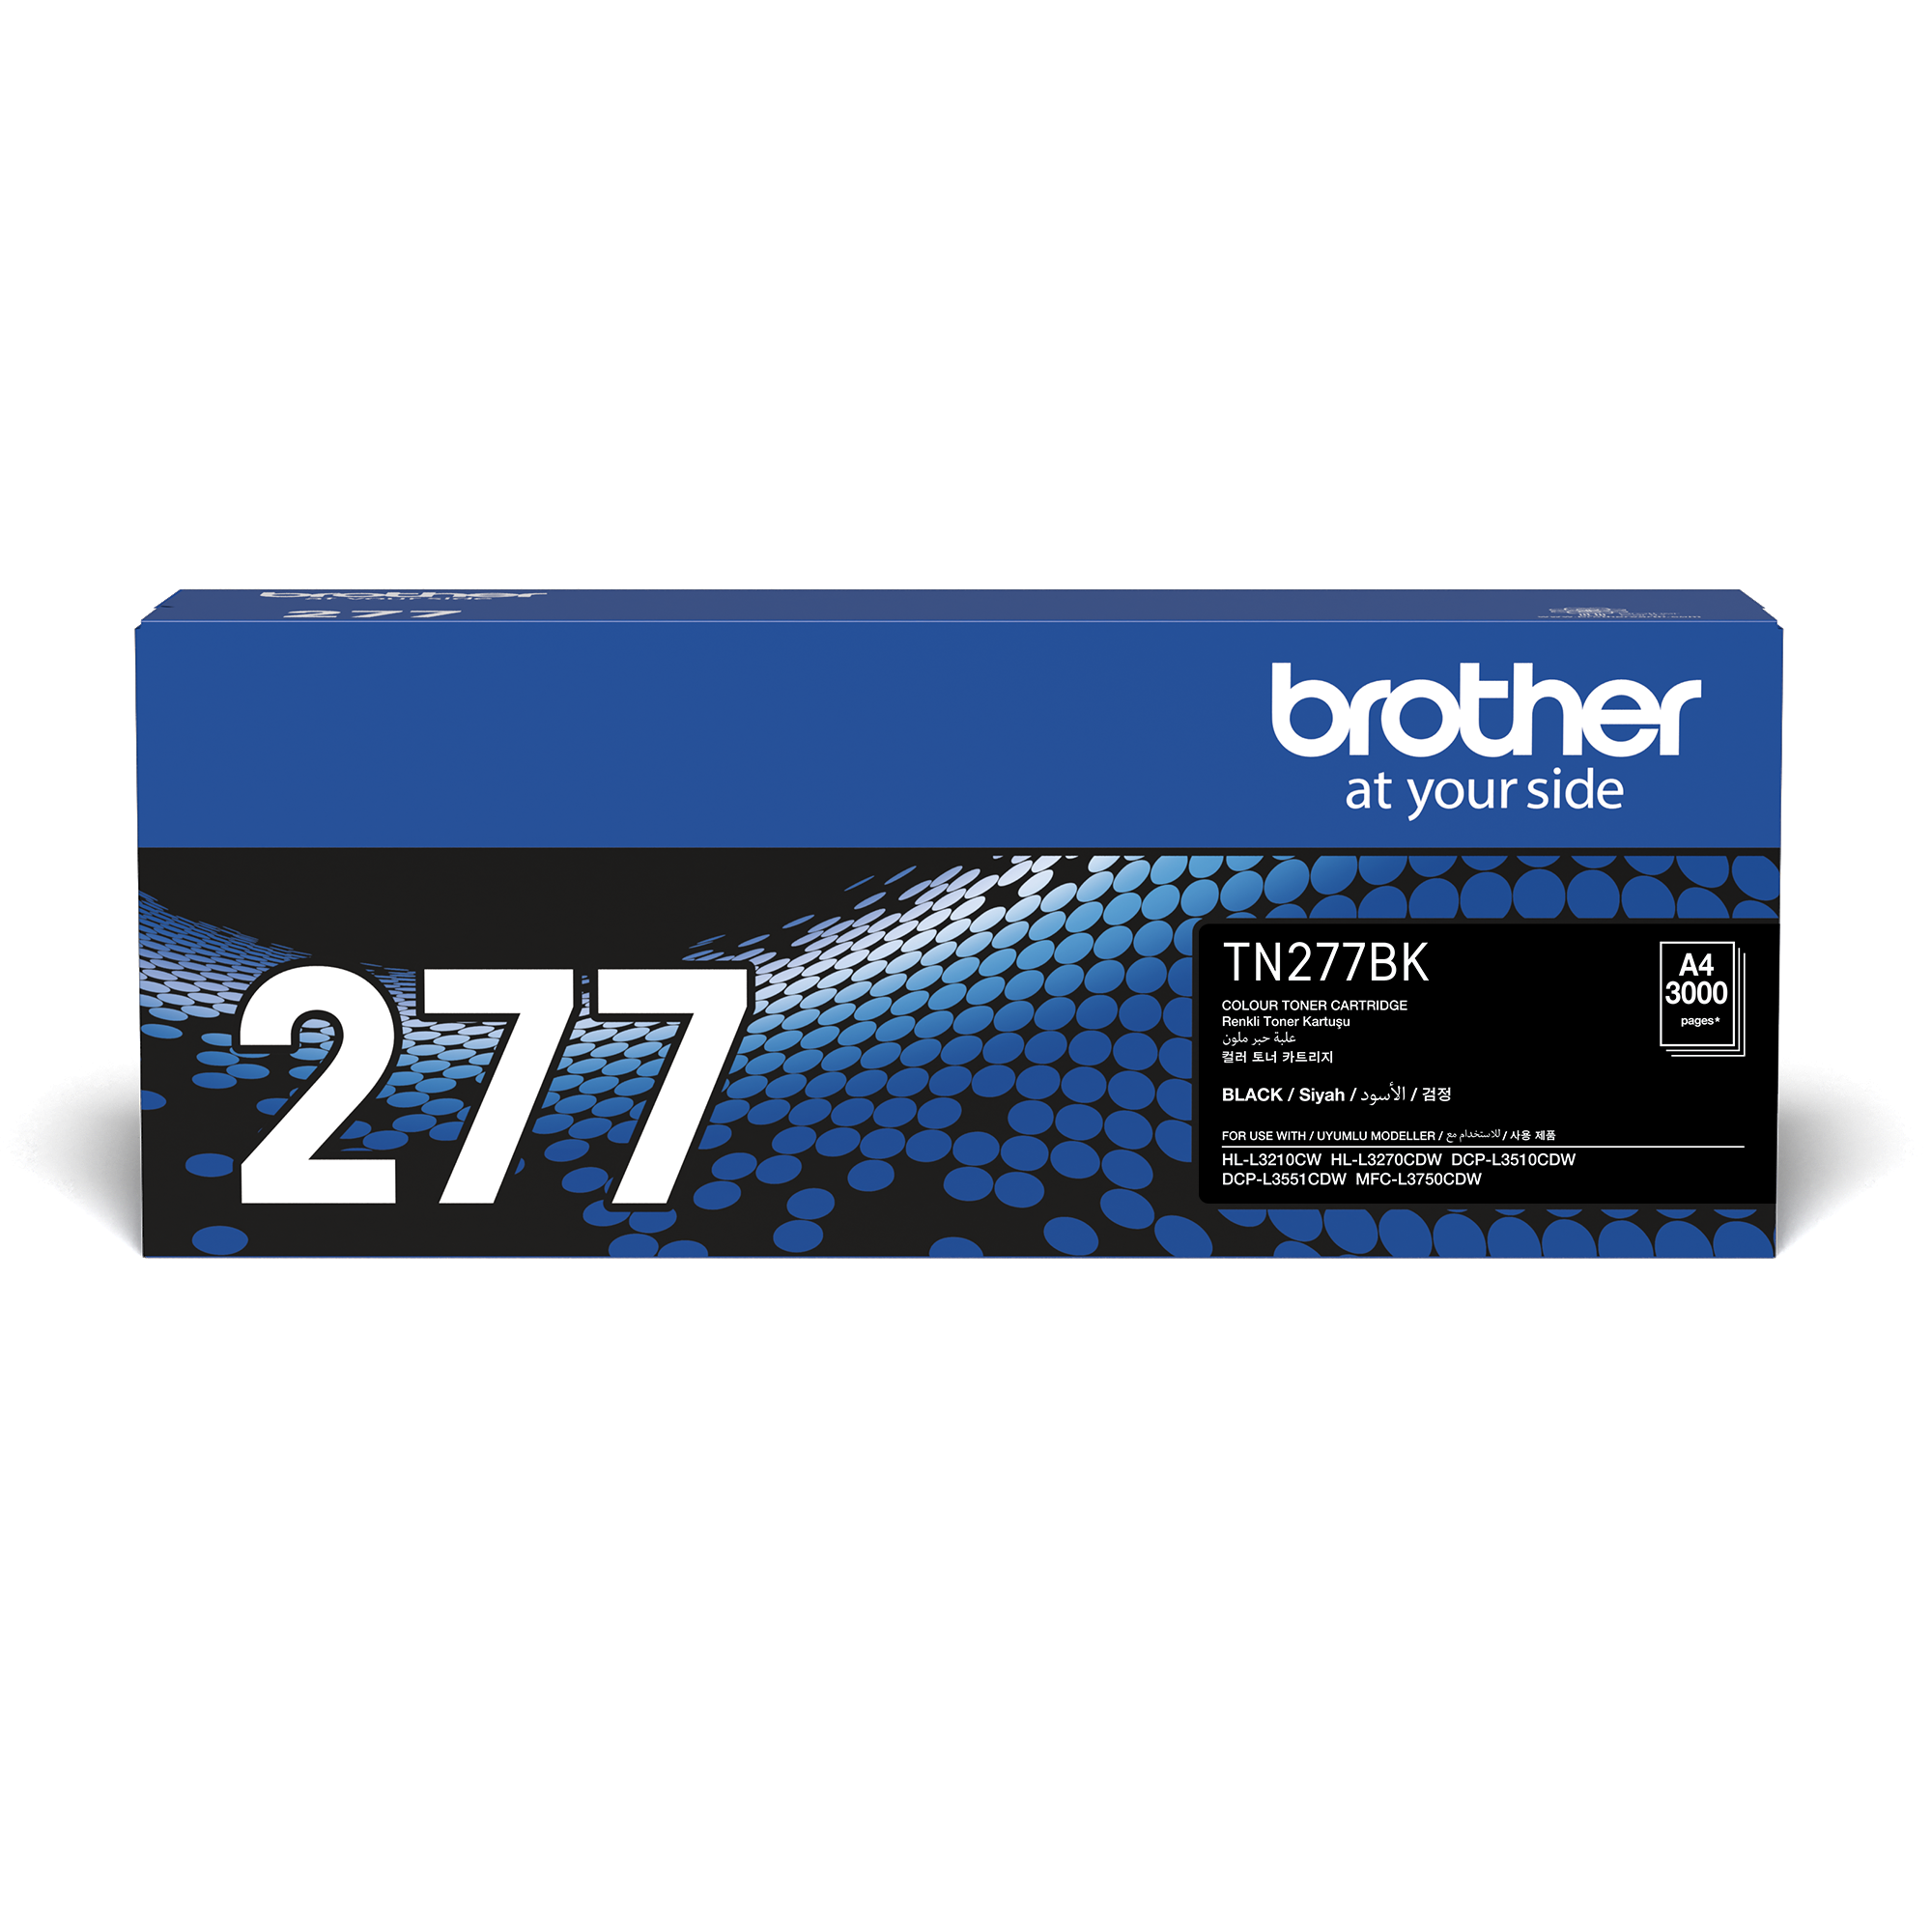 Brother TN277BK Black Toner Cartridge (3,000 Pages)